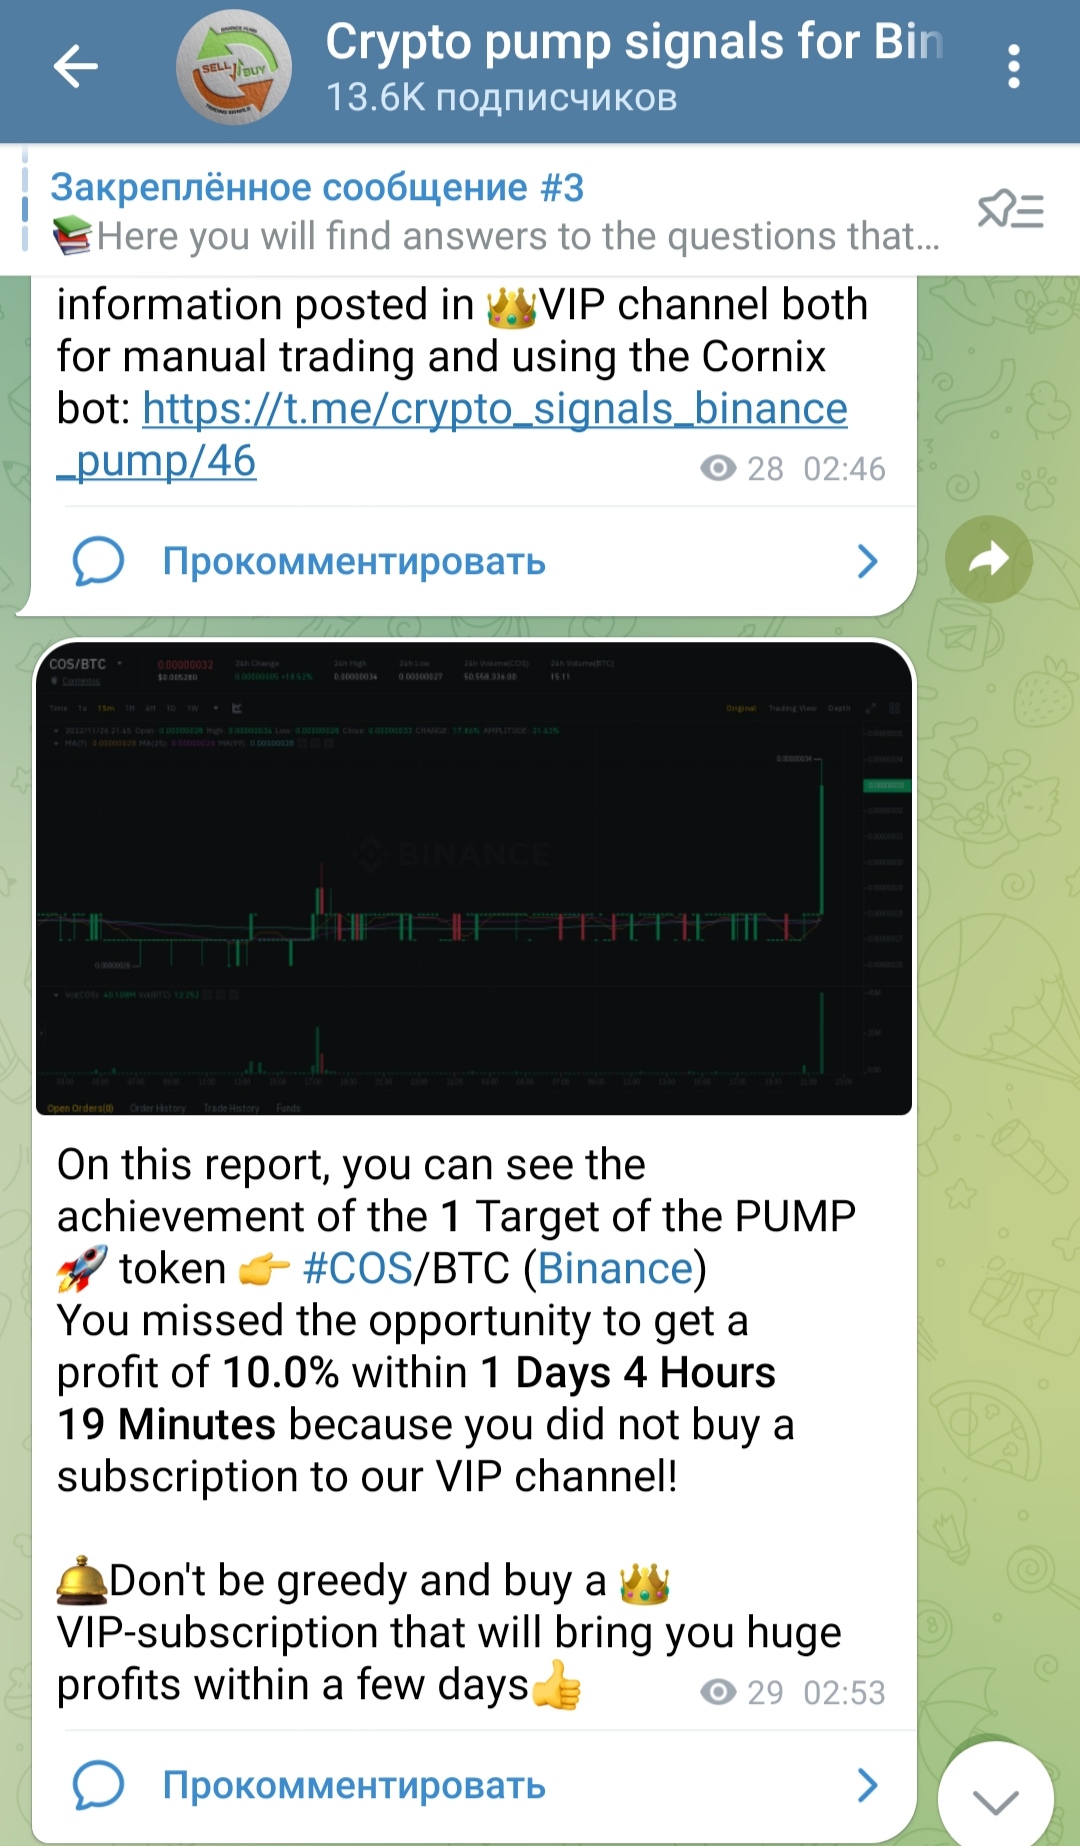 Crypto Pump Signals for Binance телеграмм